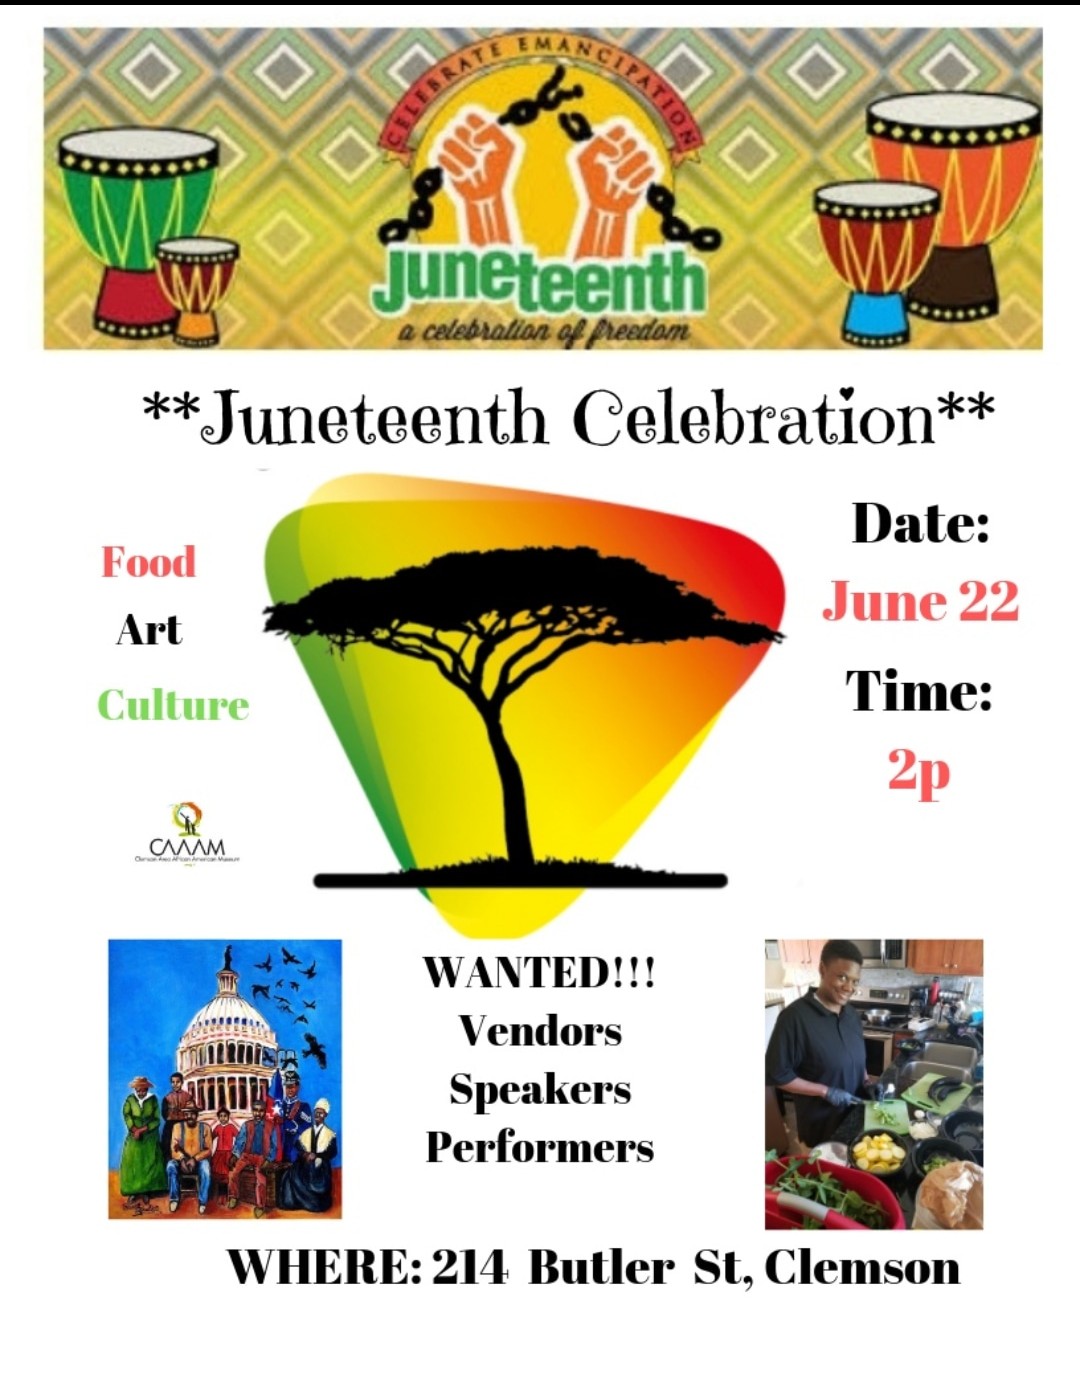 CAAAM's Juneteeth Celebration June 22, 2pm, 214 Butler St